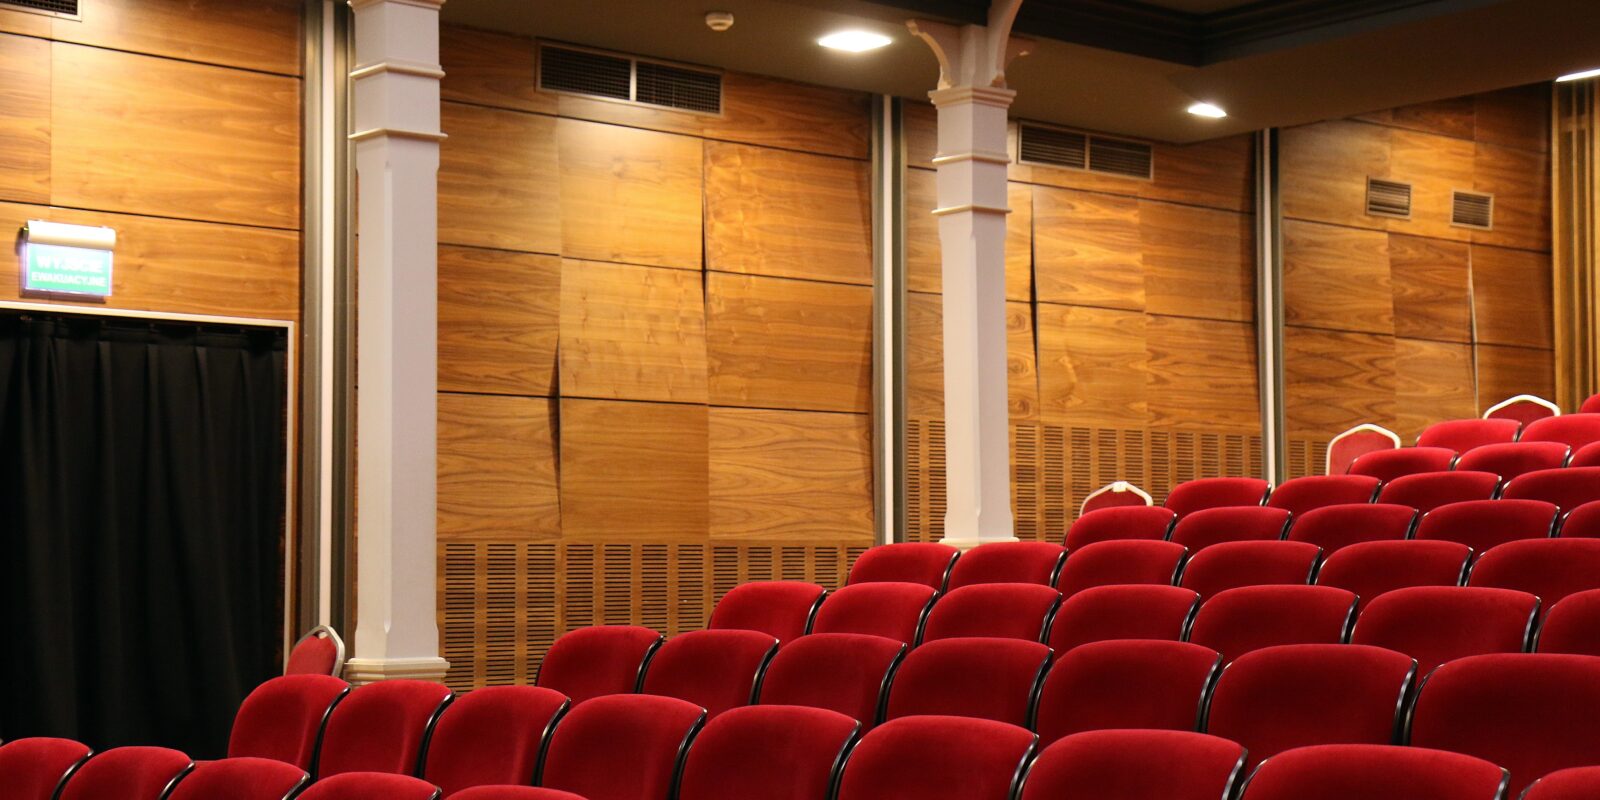 image of theatre seats